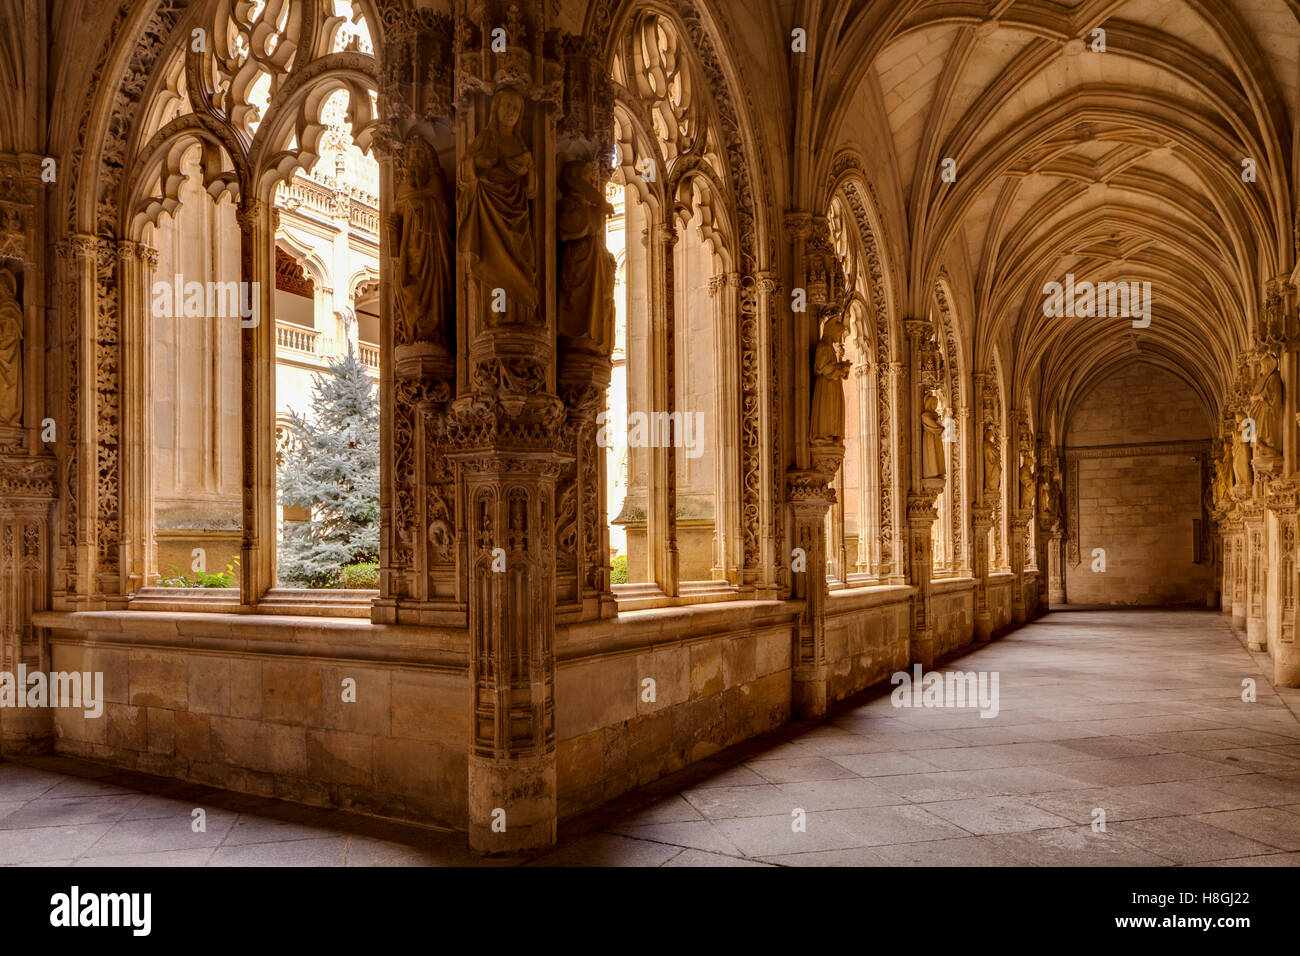 The cloister Monasterio de San Juan de los Reyes in Toledo, Spain. Stock Photo